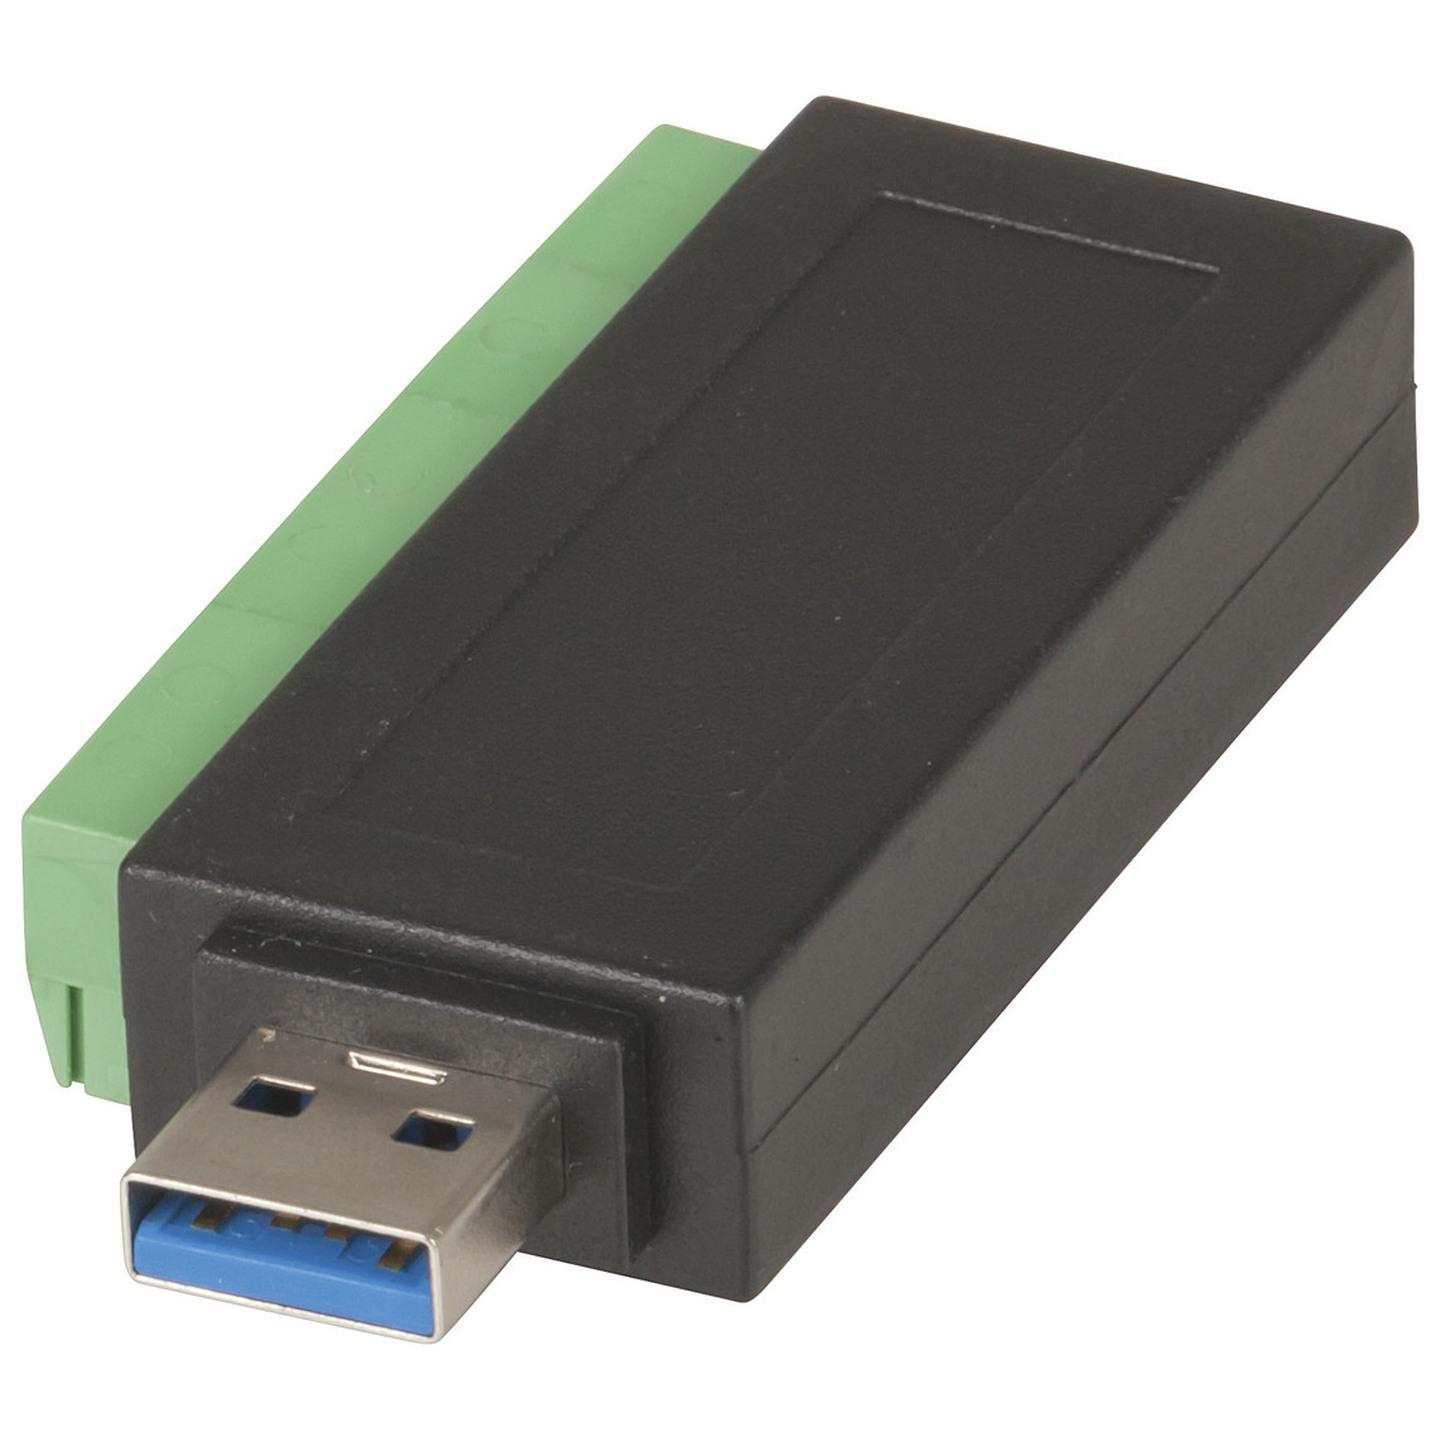 USB 3.0 Type-A Plug to 10-Way Screw Terminal Header Adaptor